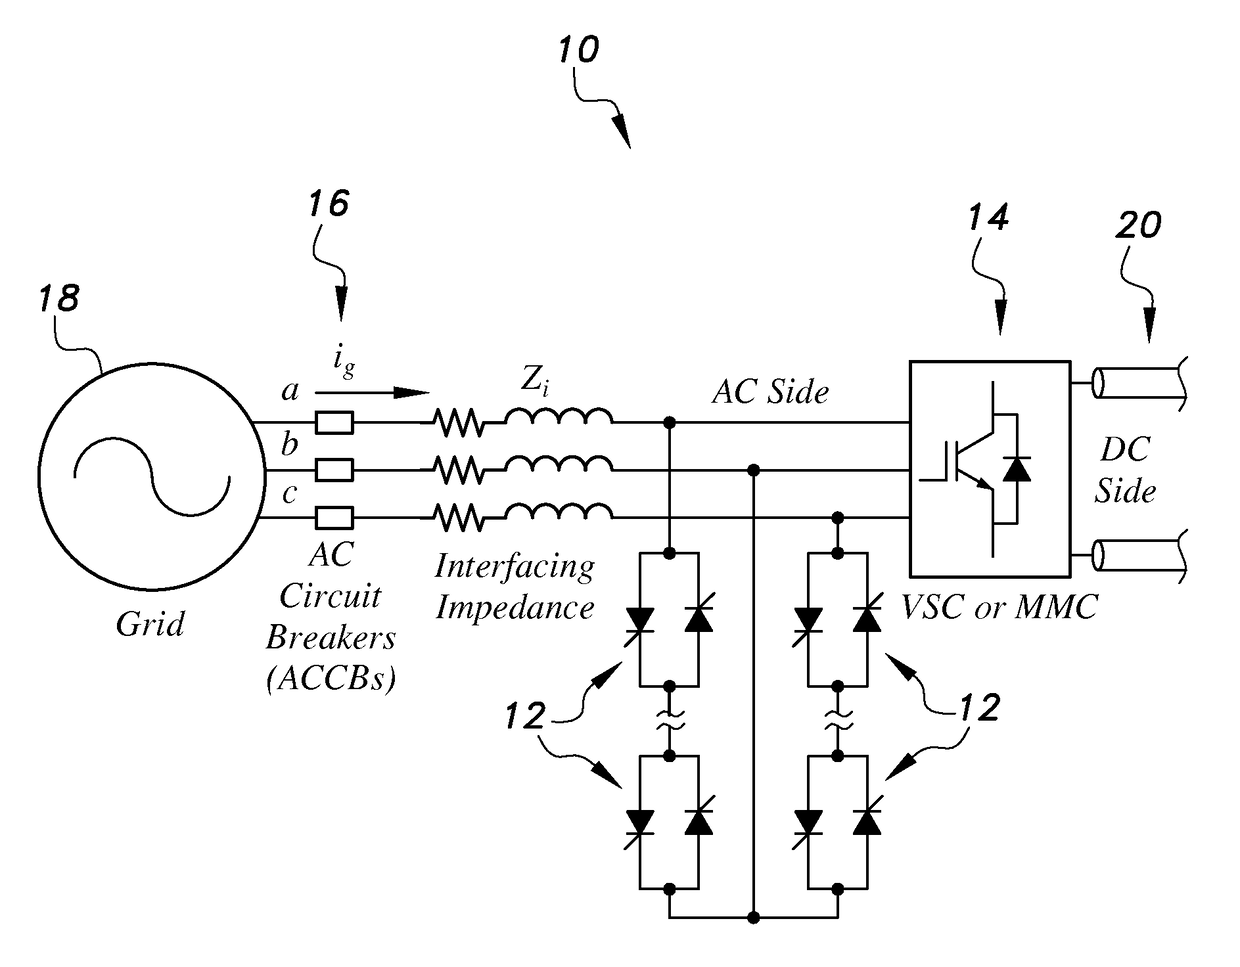 DC side fault isolator for high voltage DC convertors